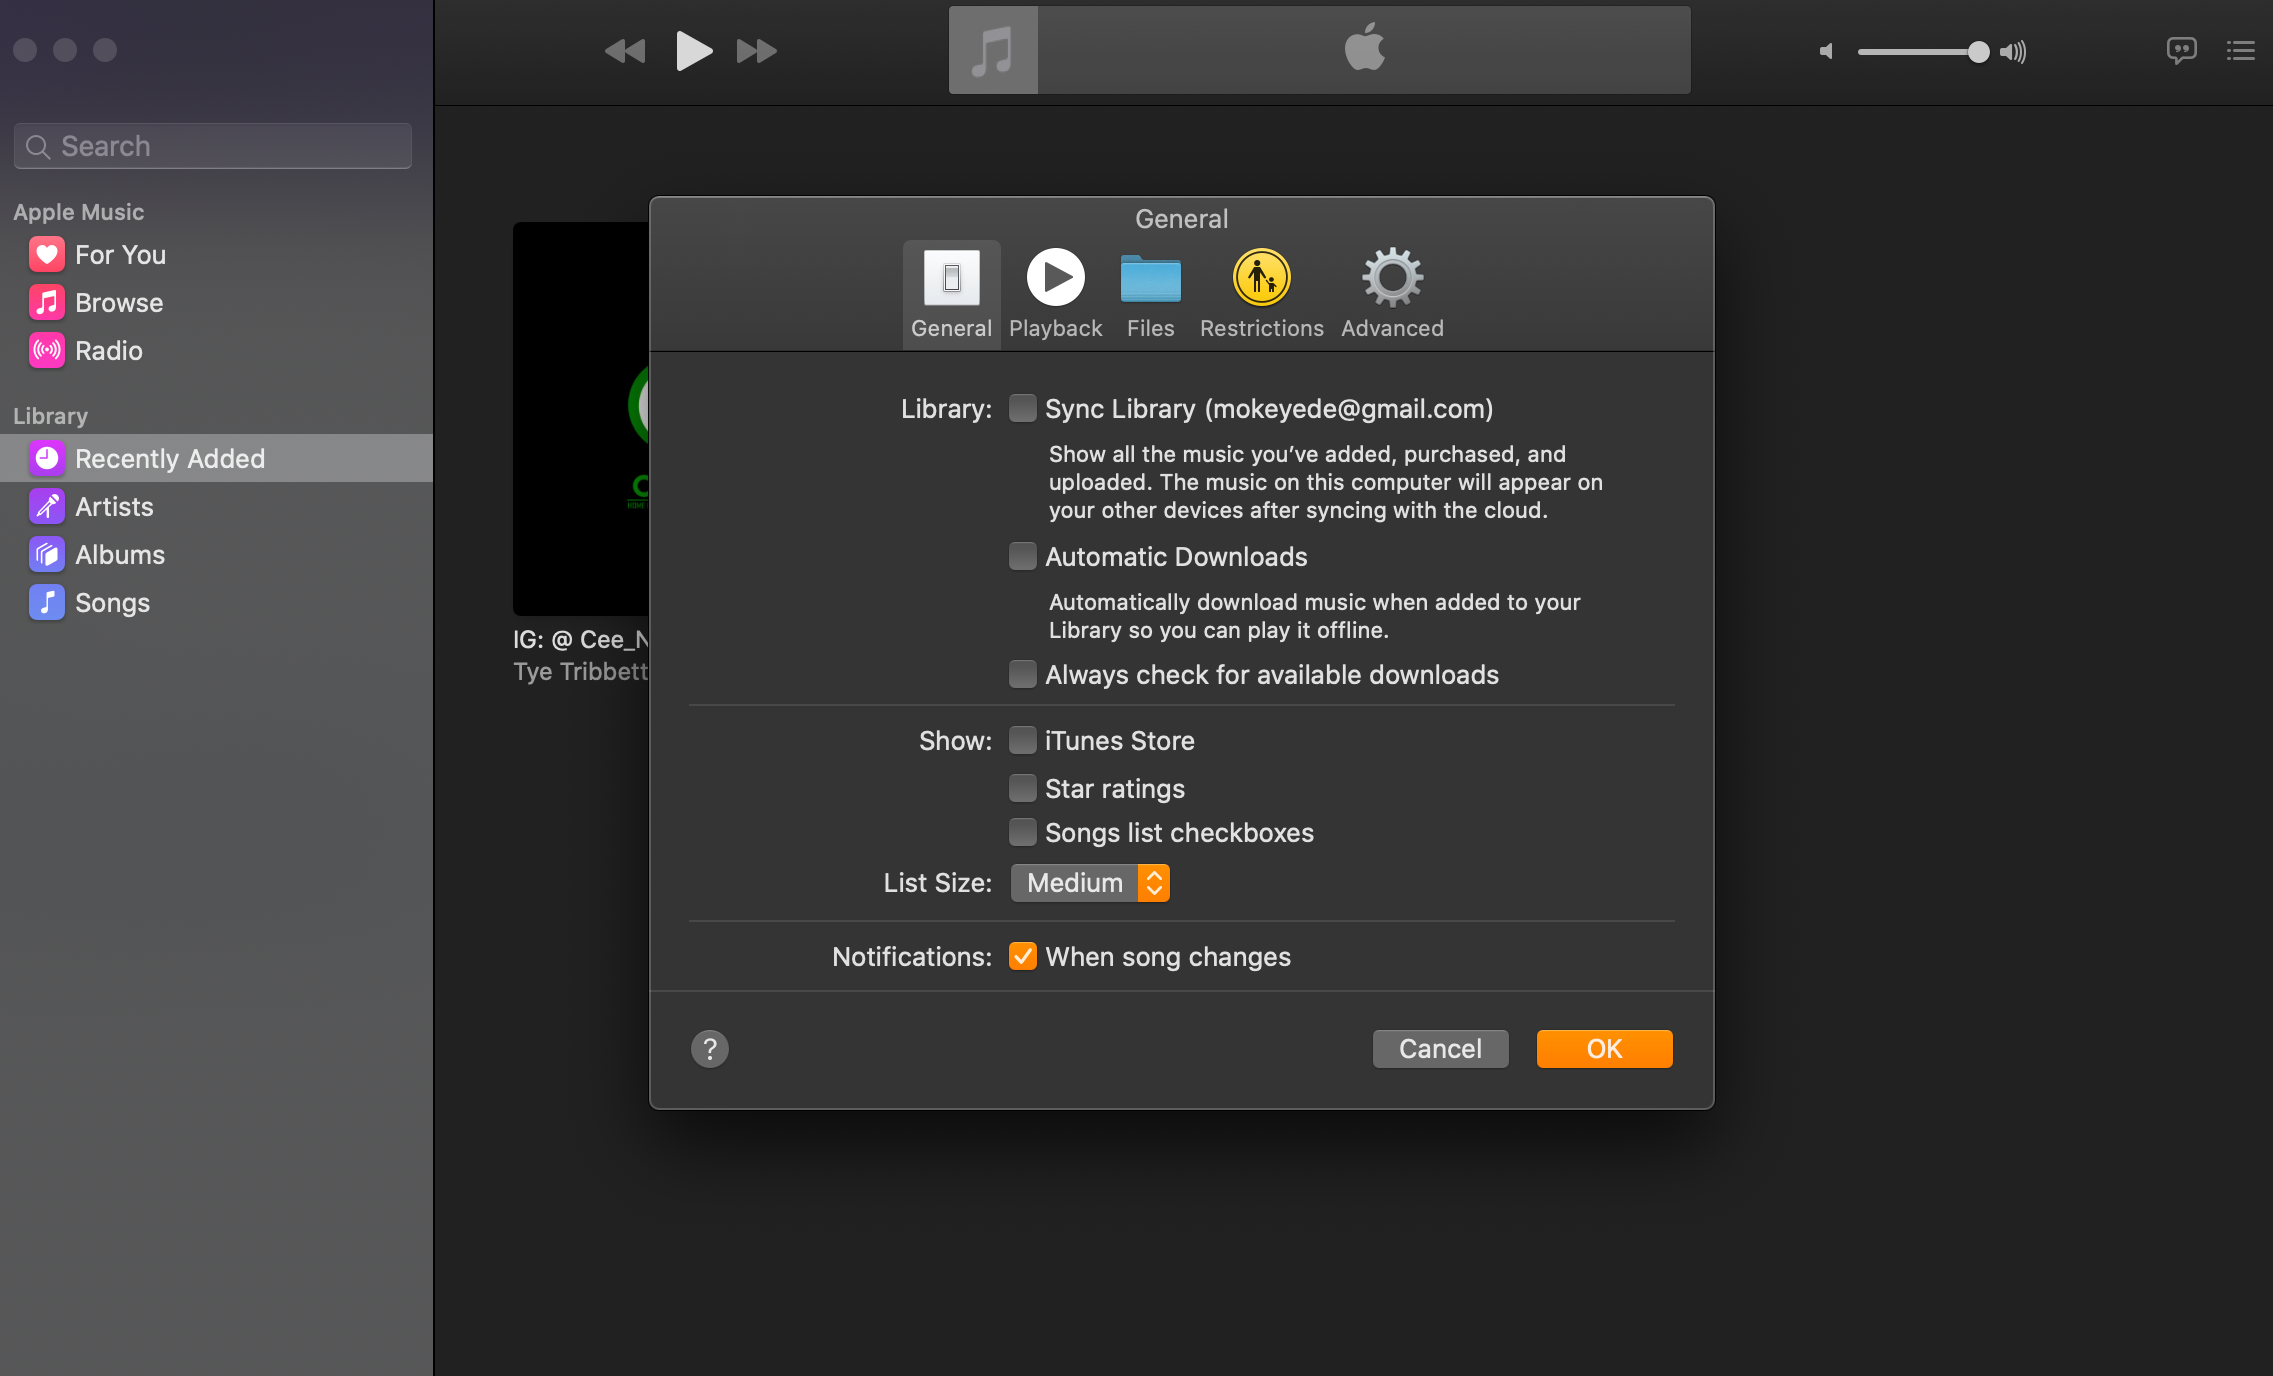 Apple Music General Settings on a Mac